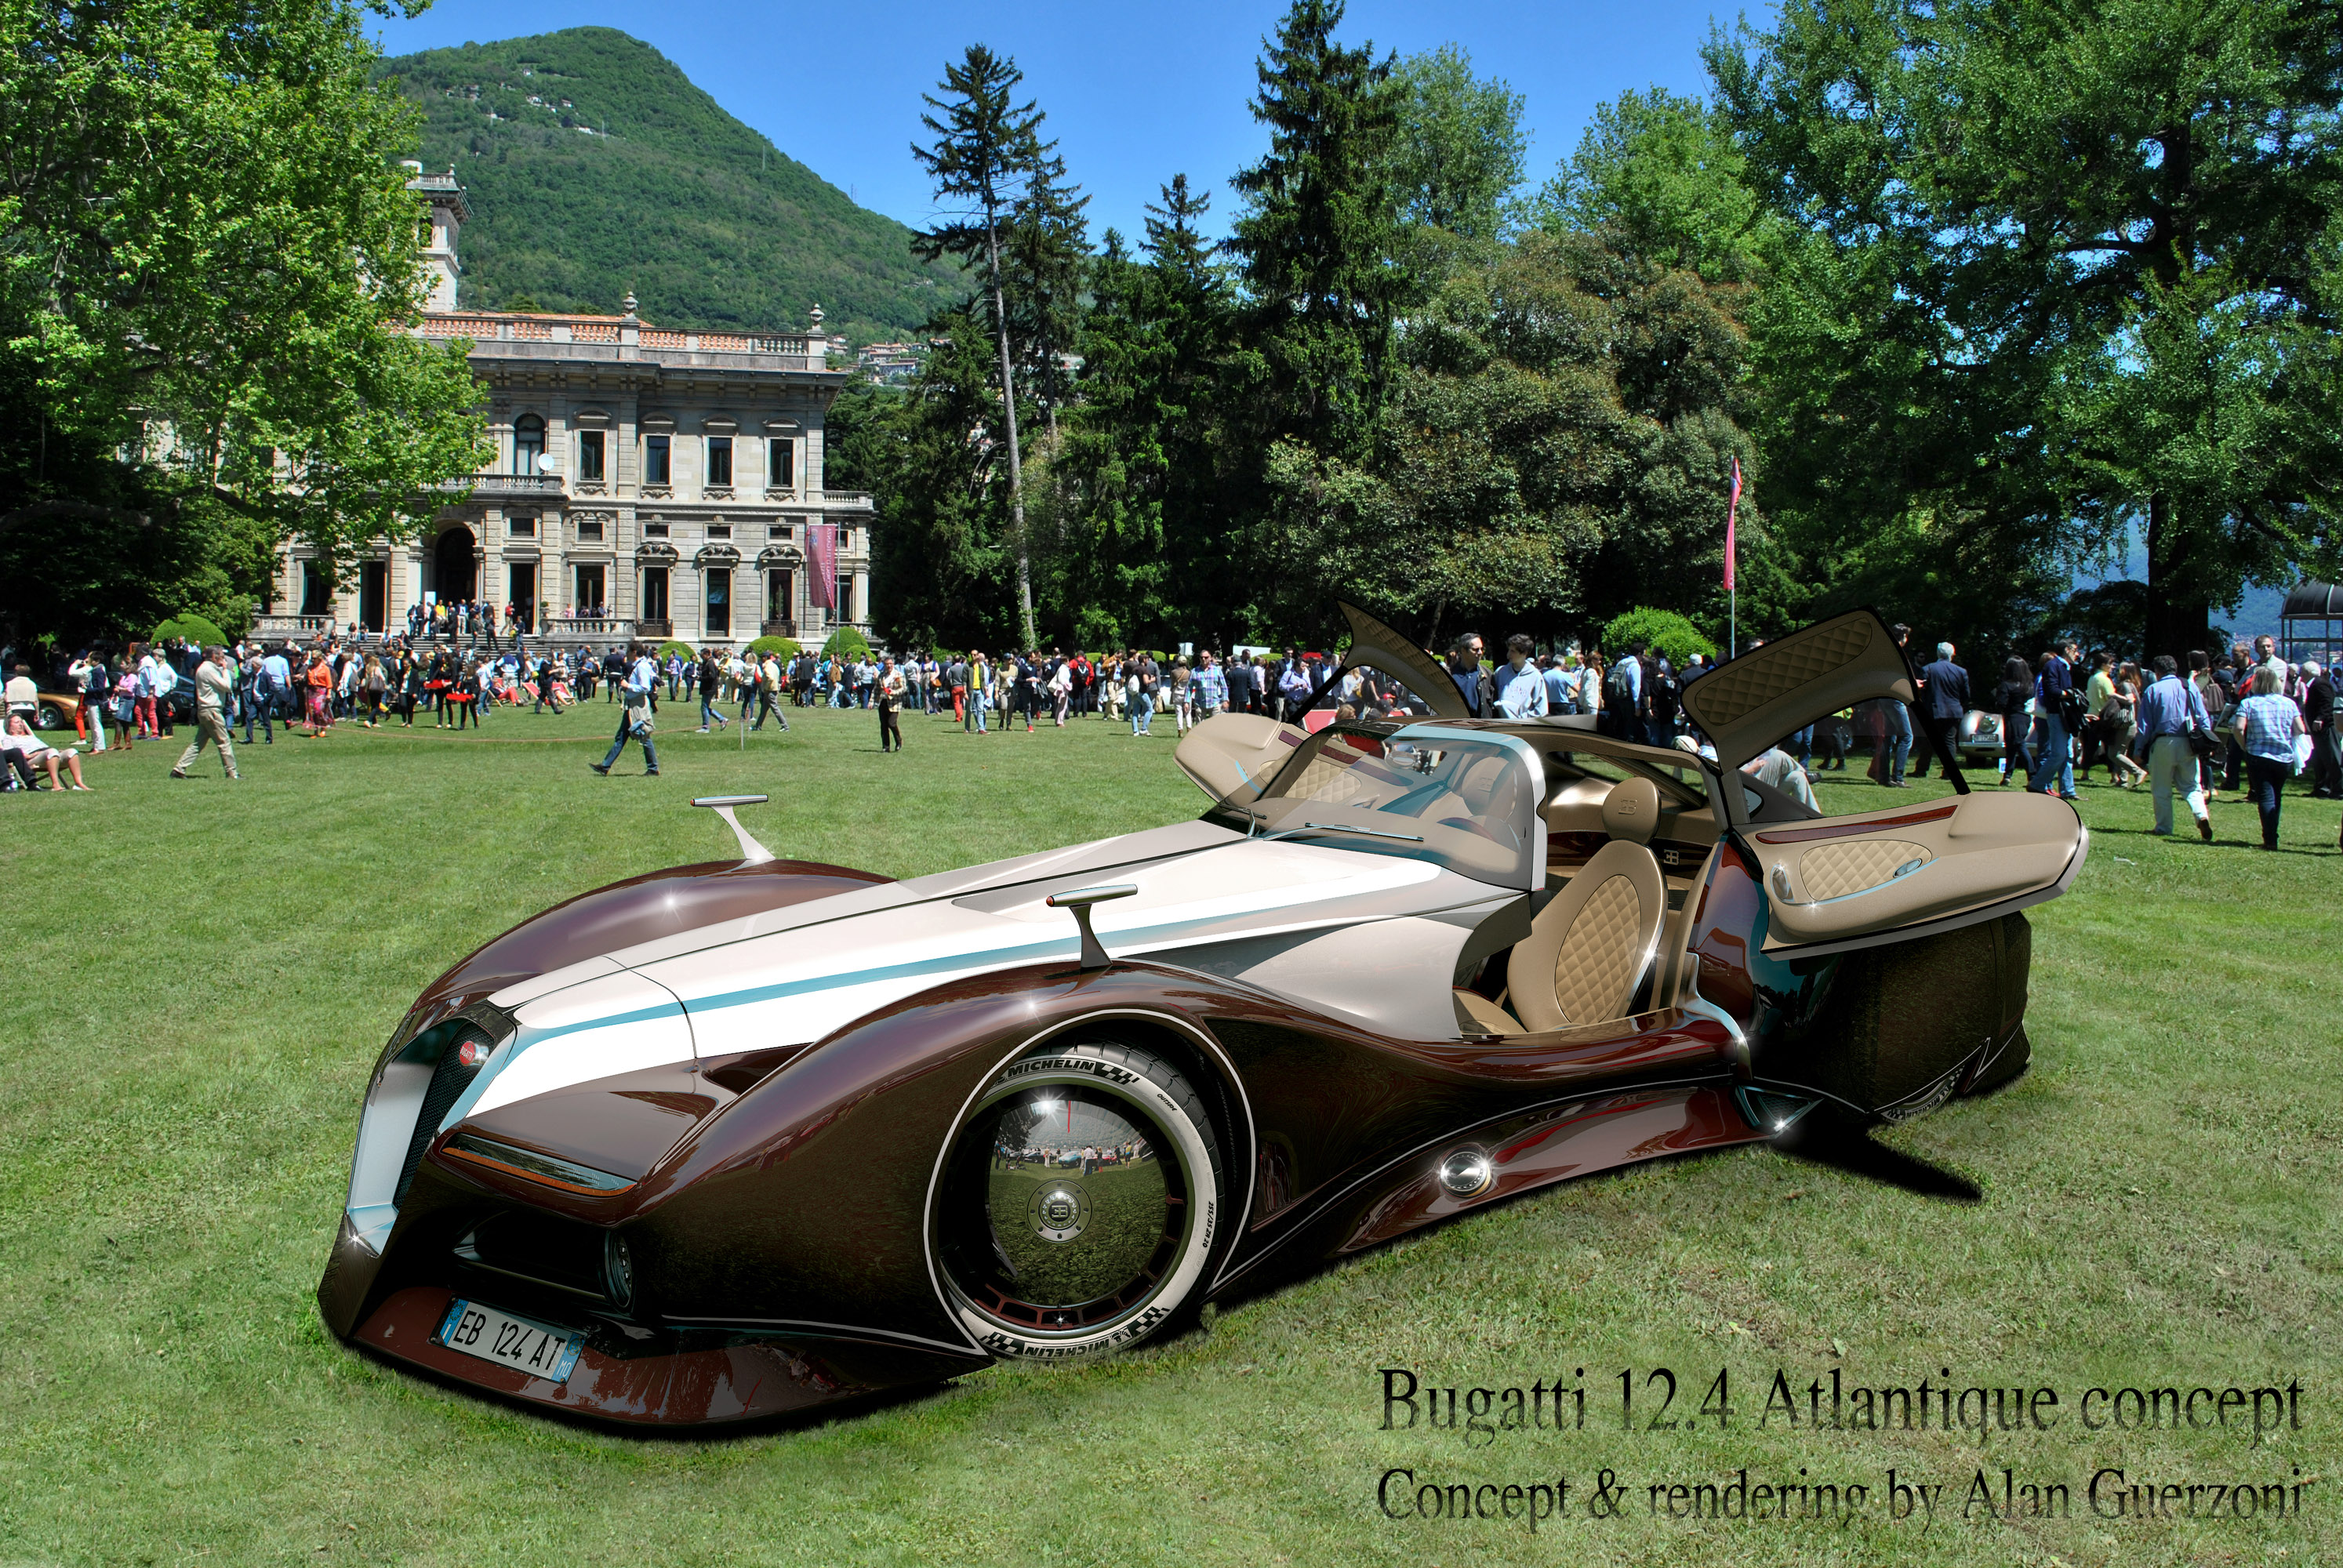 Bugatti 12.4 Atlantique Grand Sport Concept Backgrounds on Wallpapers Vista